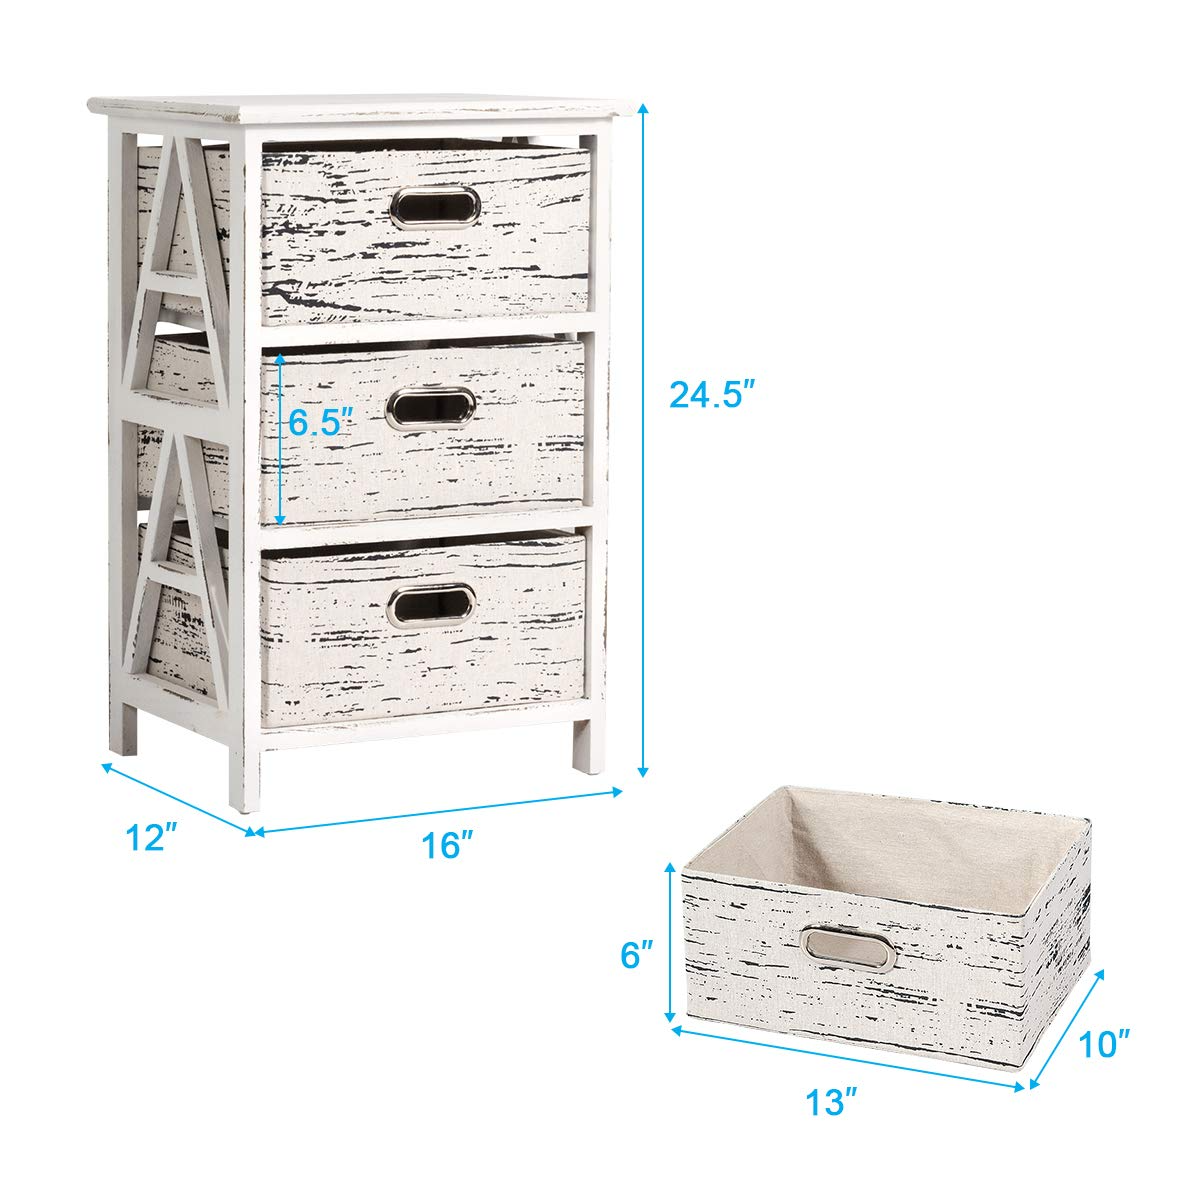 Giantex Storage Drawer Units W/ 3 Fabrics Storage Drawers and Wood Frame (1)